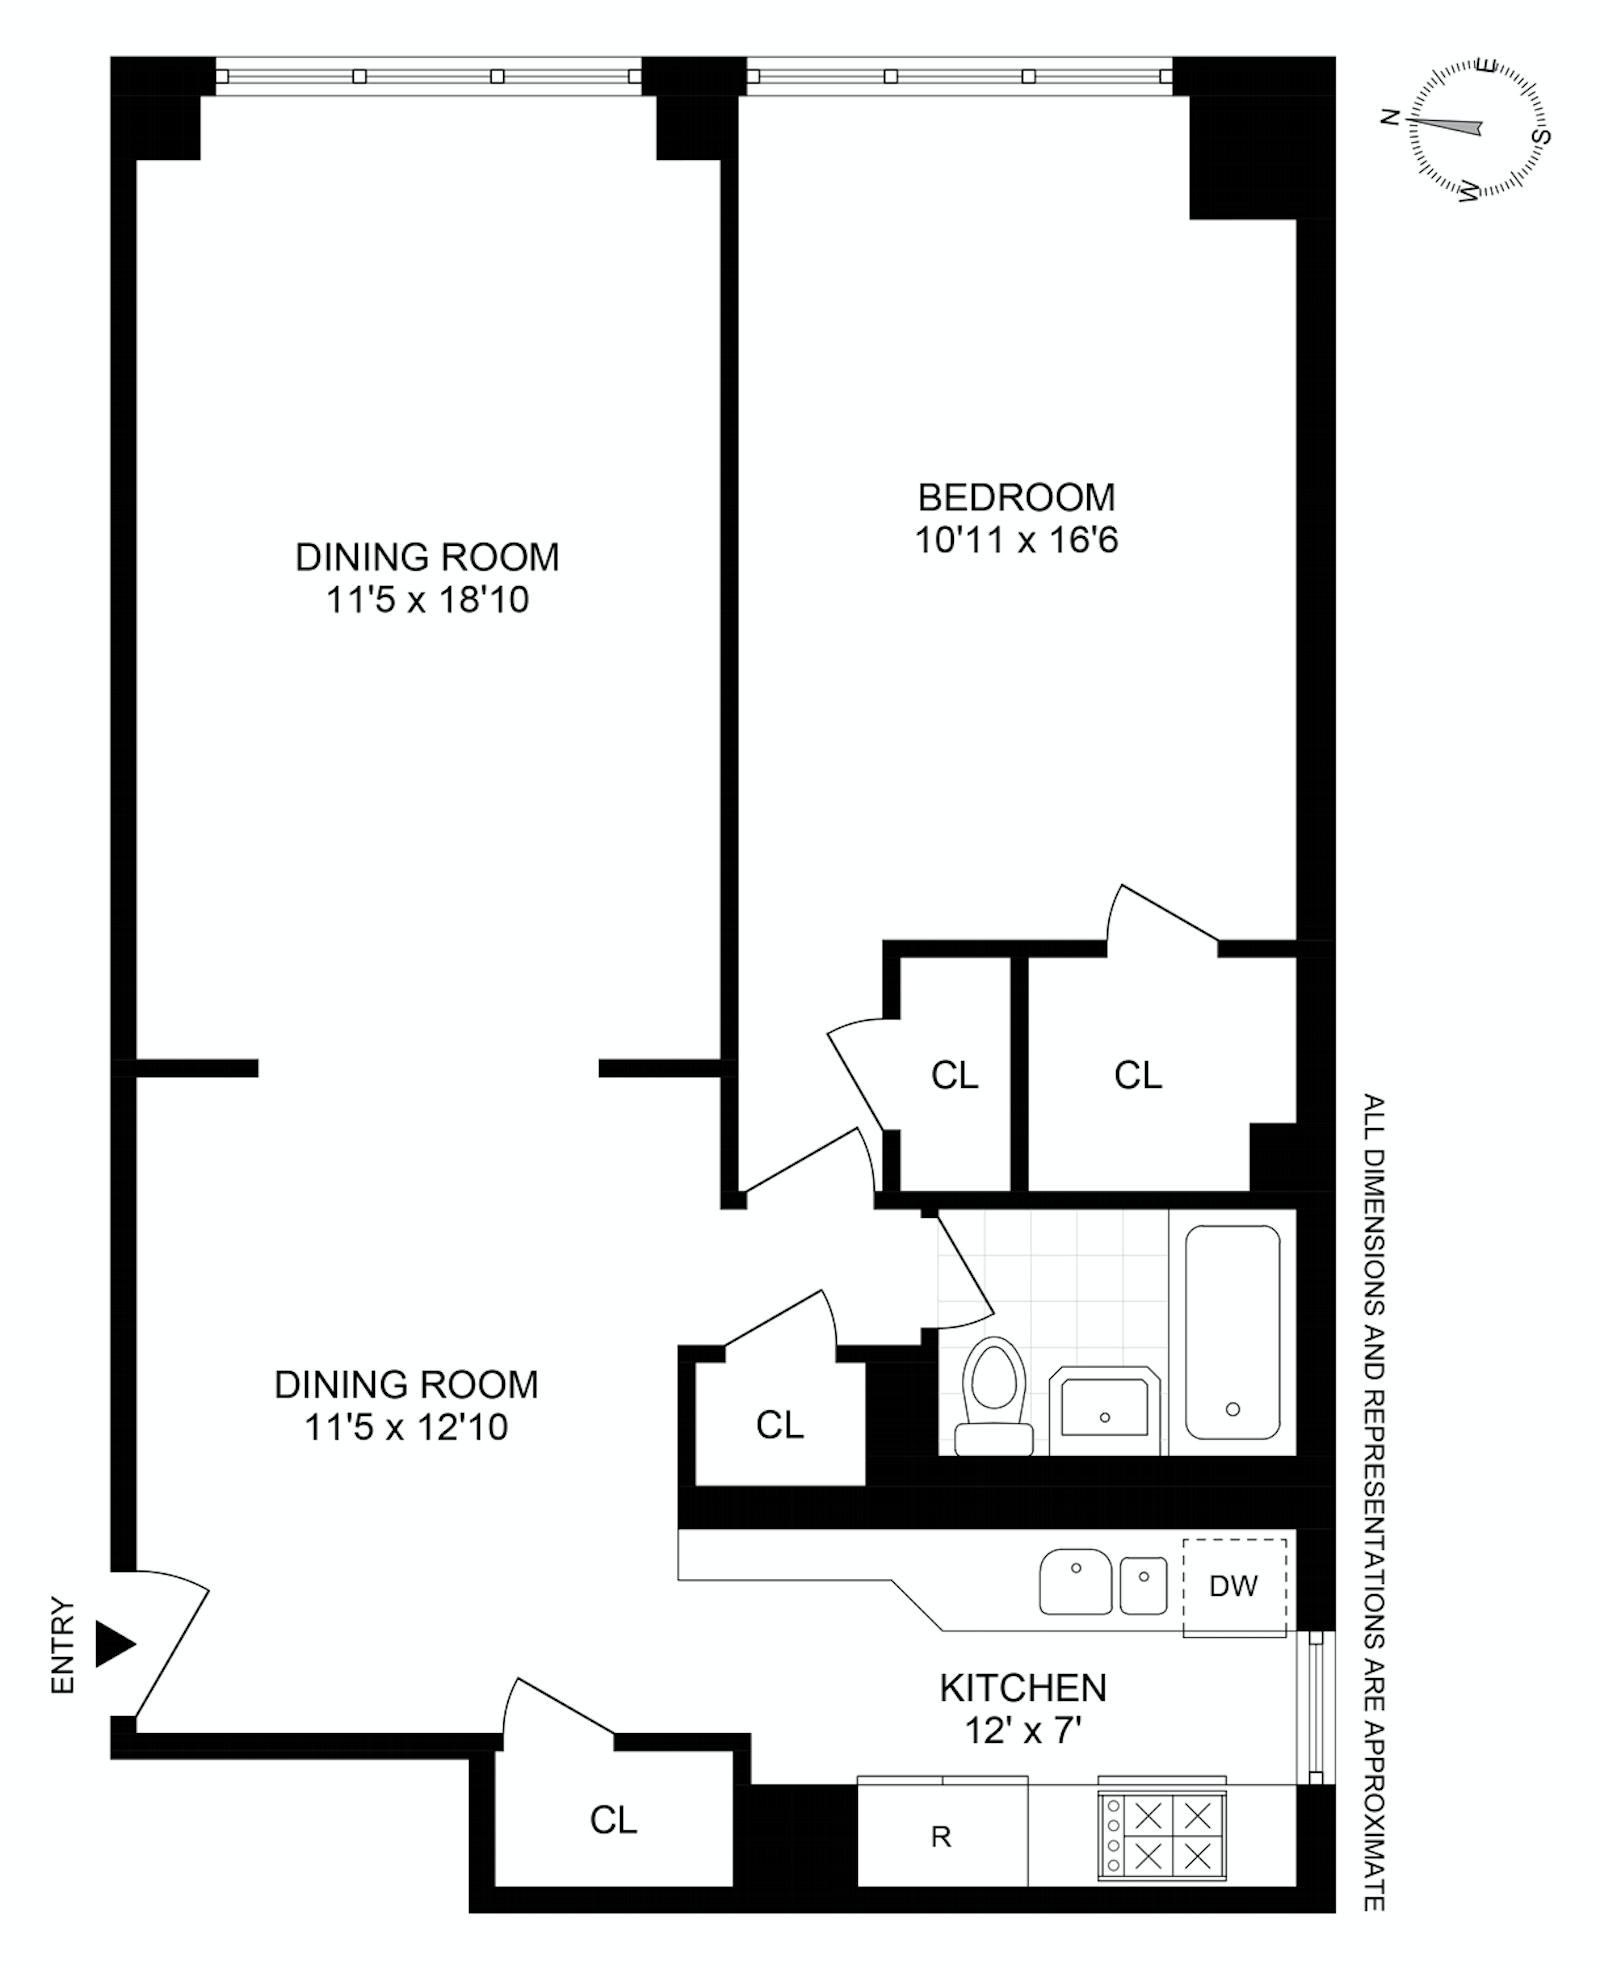 Floorplan for 1401 Ocean Avenue, 8